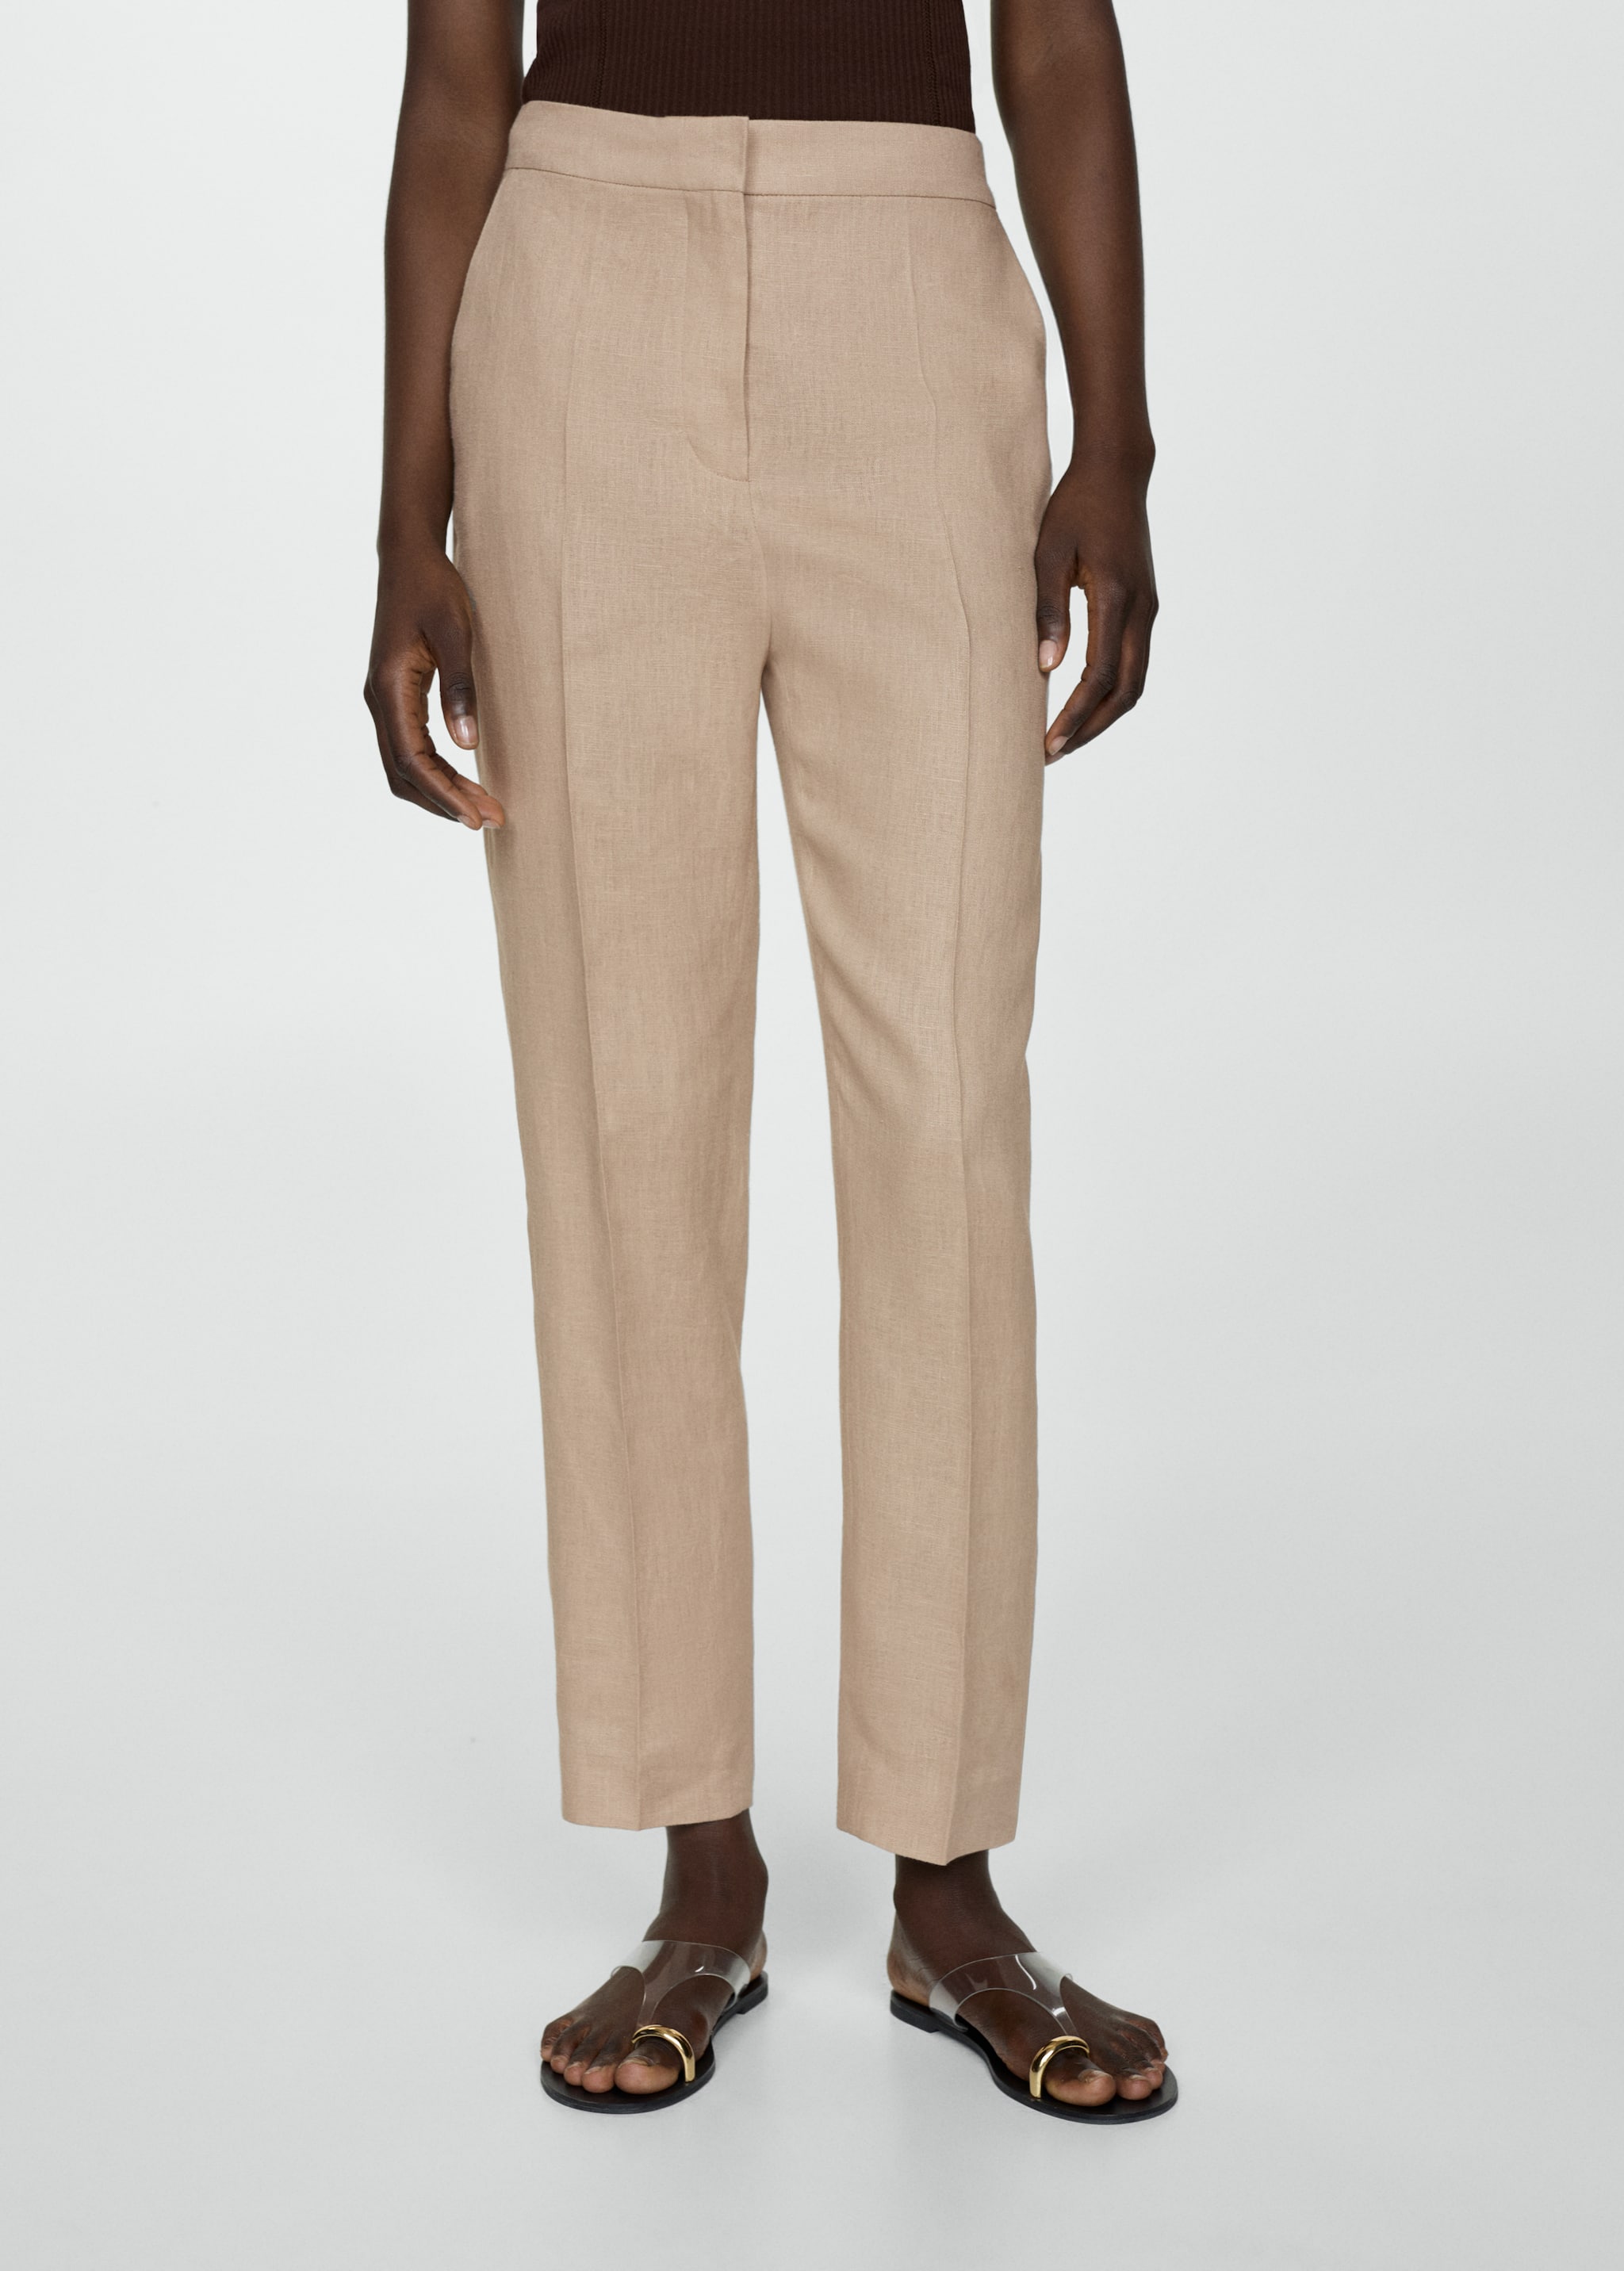 100% linen trousers - Medium plane